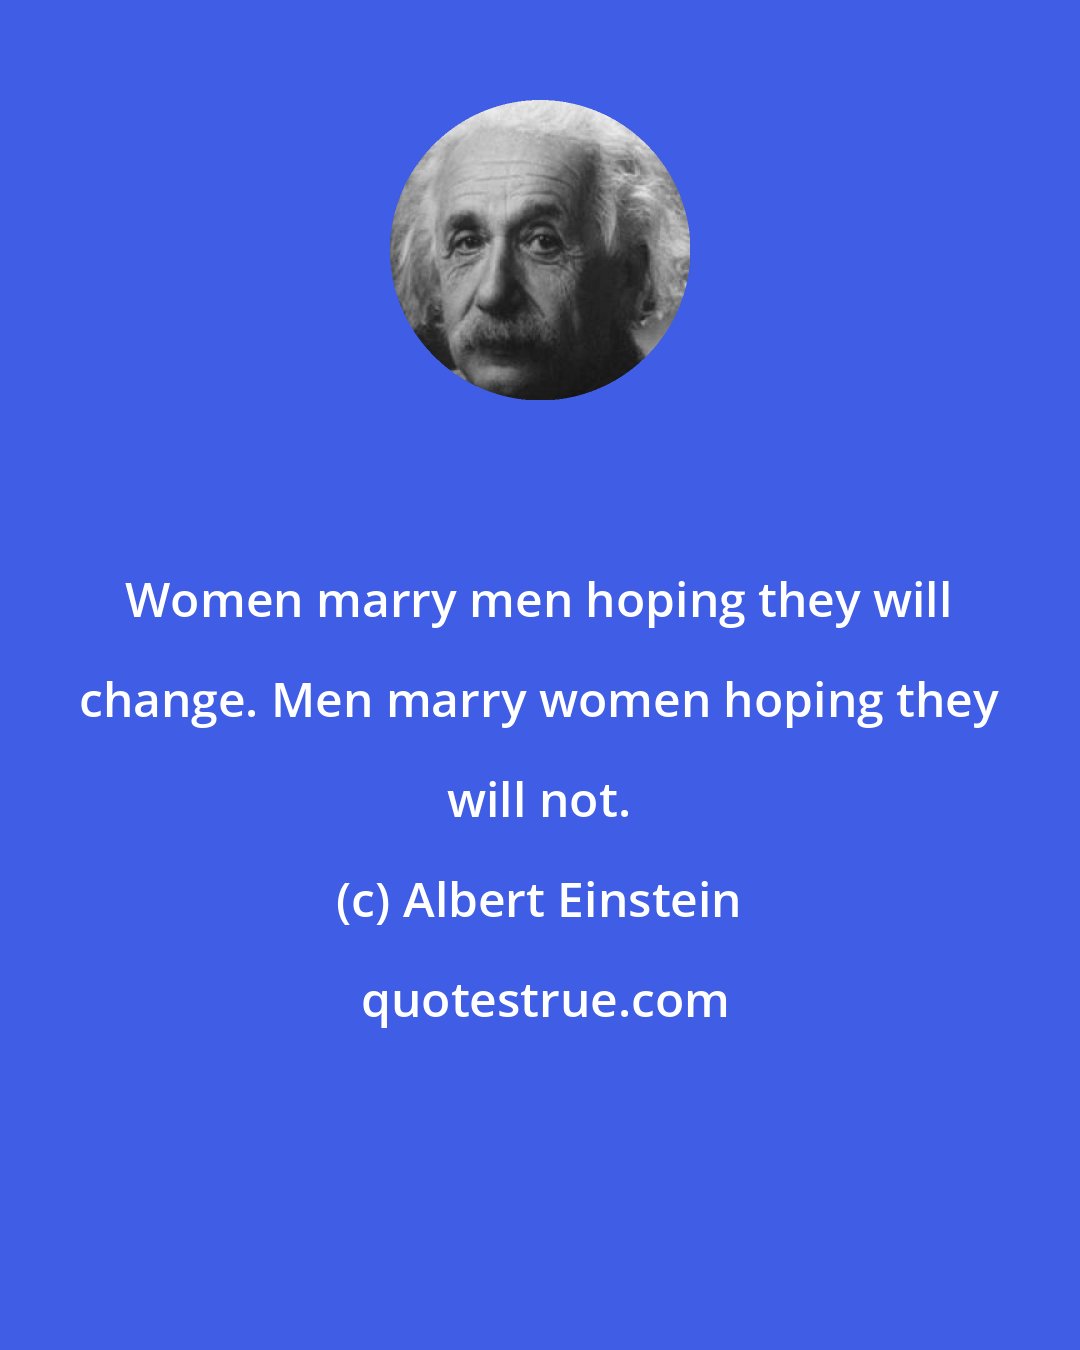 Albert Einstein: Women marry men hoping they will change. Men marry women hoping they will not.